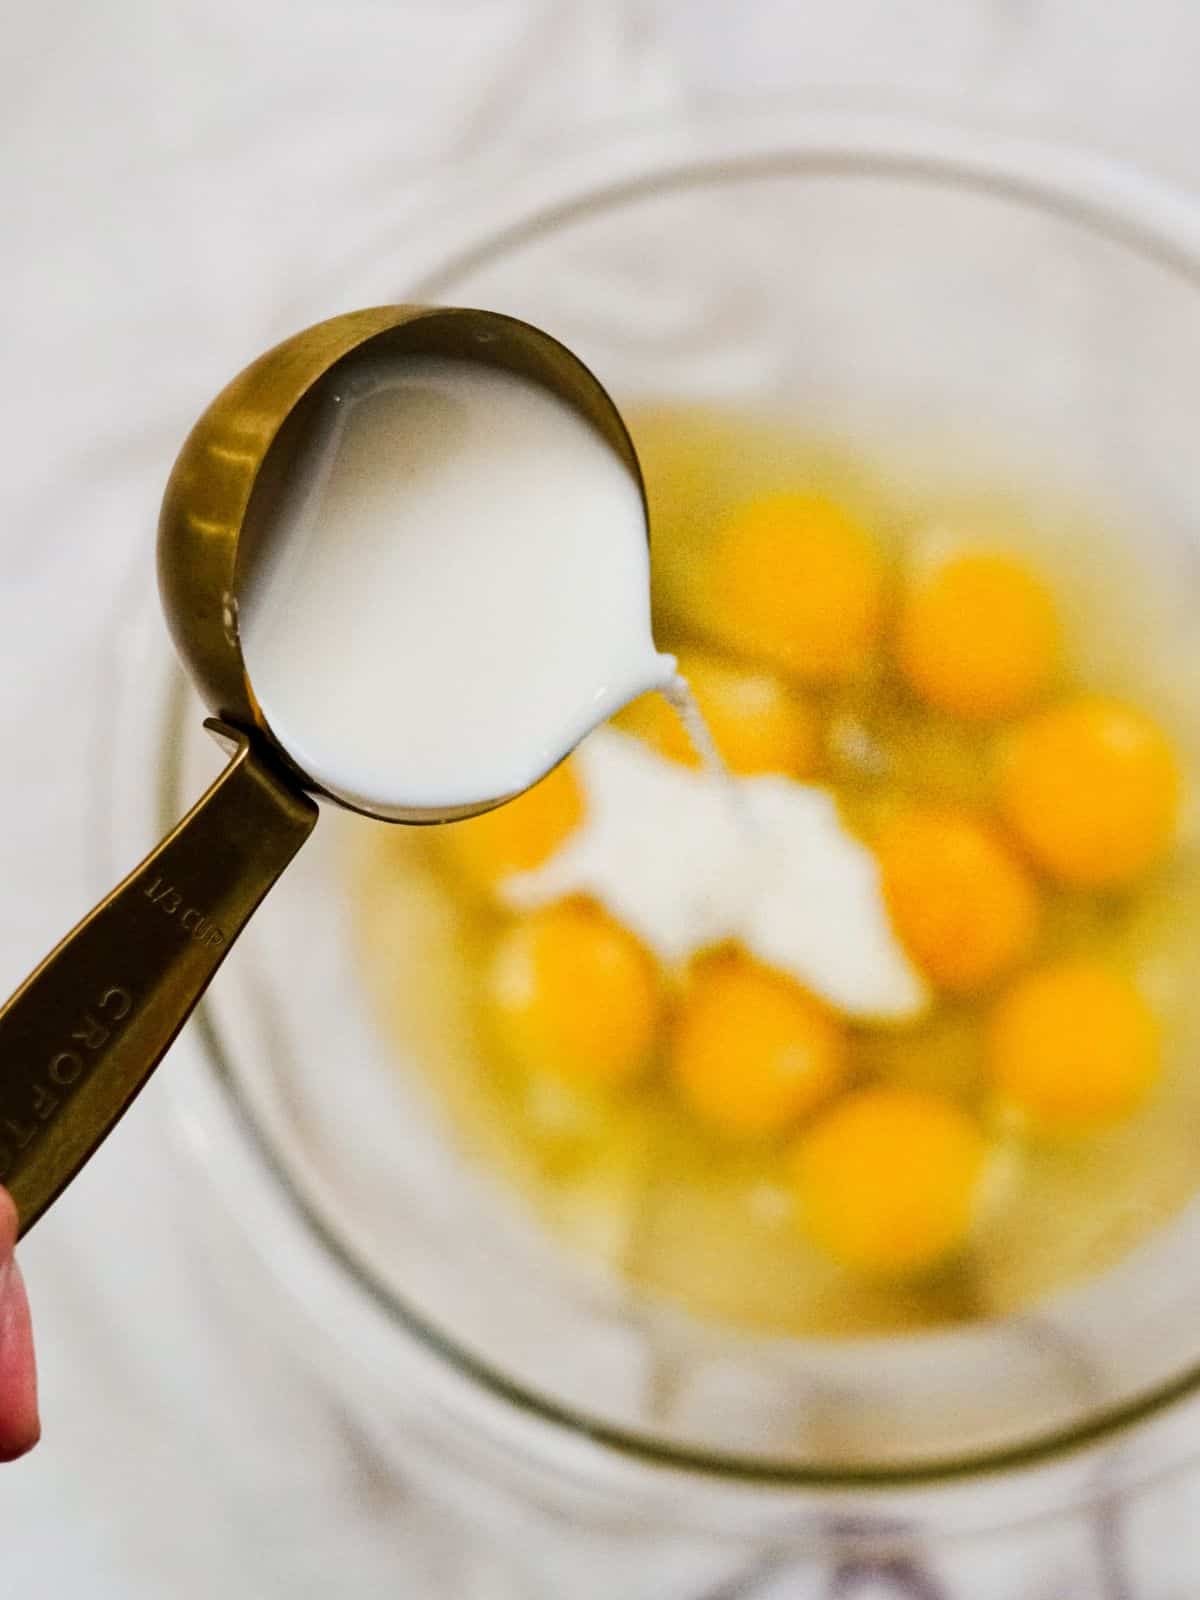 Add milk to scrambled eggs.